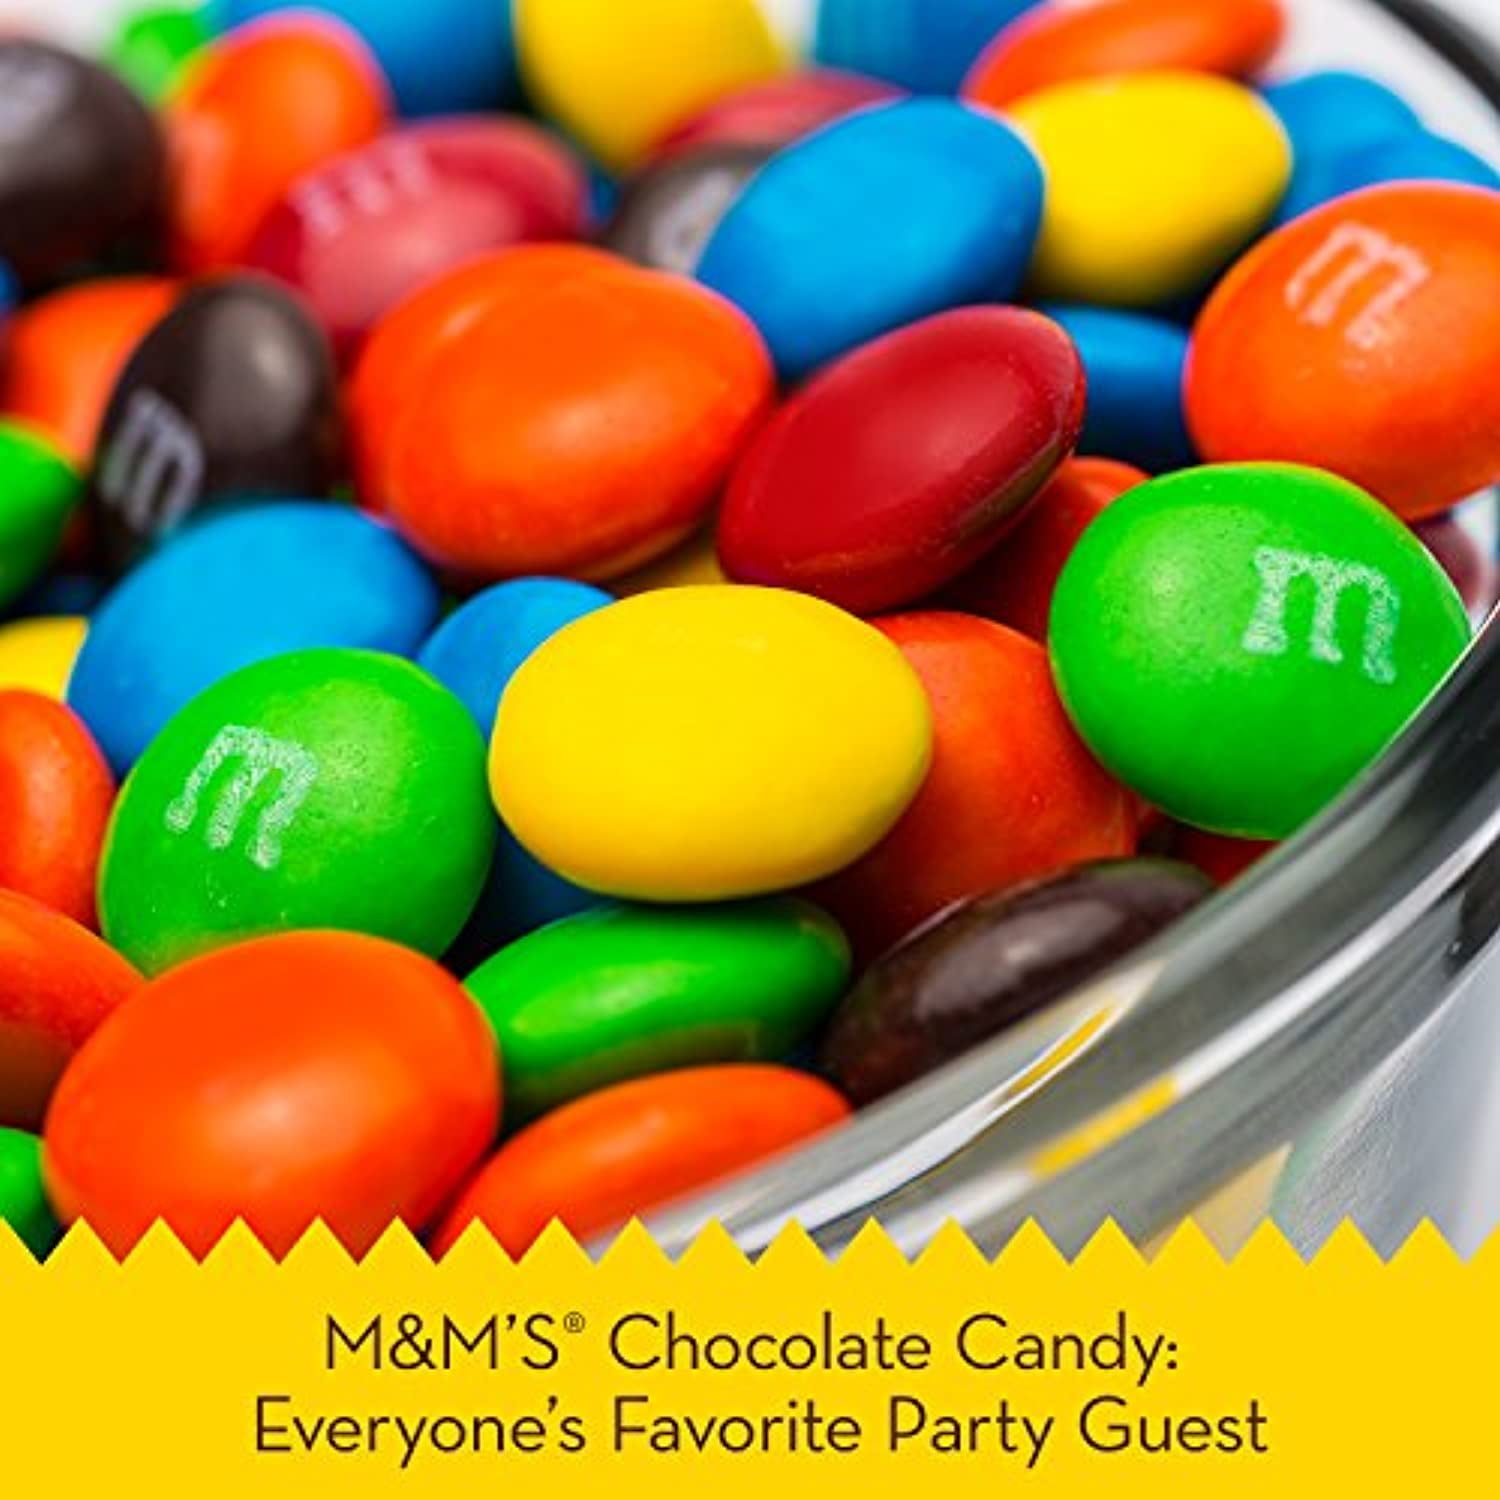 M&M'S Milk Chocolate Candy Bag, 11.4-oz. Bag - Mariano's